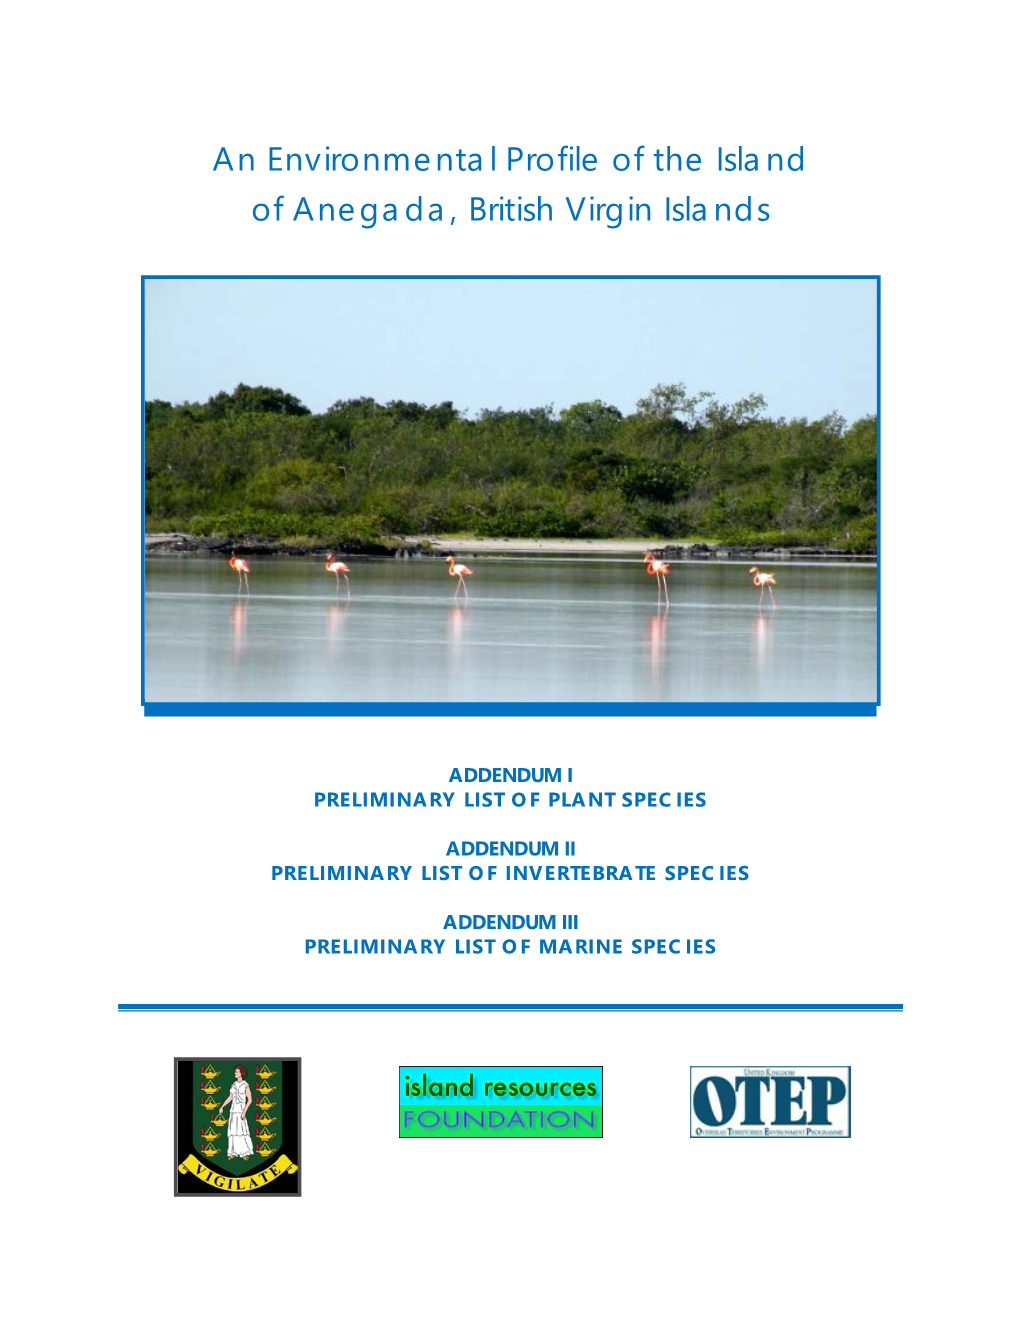 An Environmental Profile of the Island of Anegada, British Virgin Islands